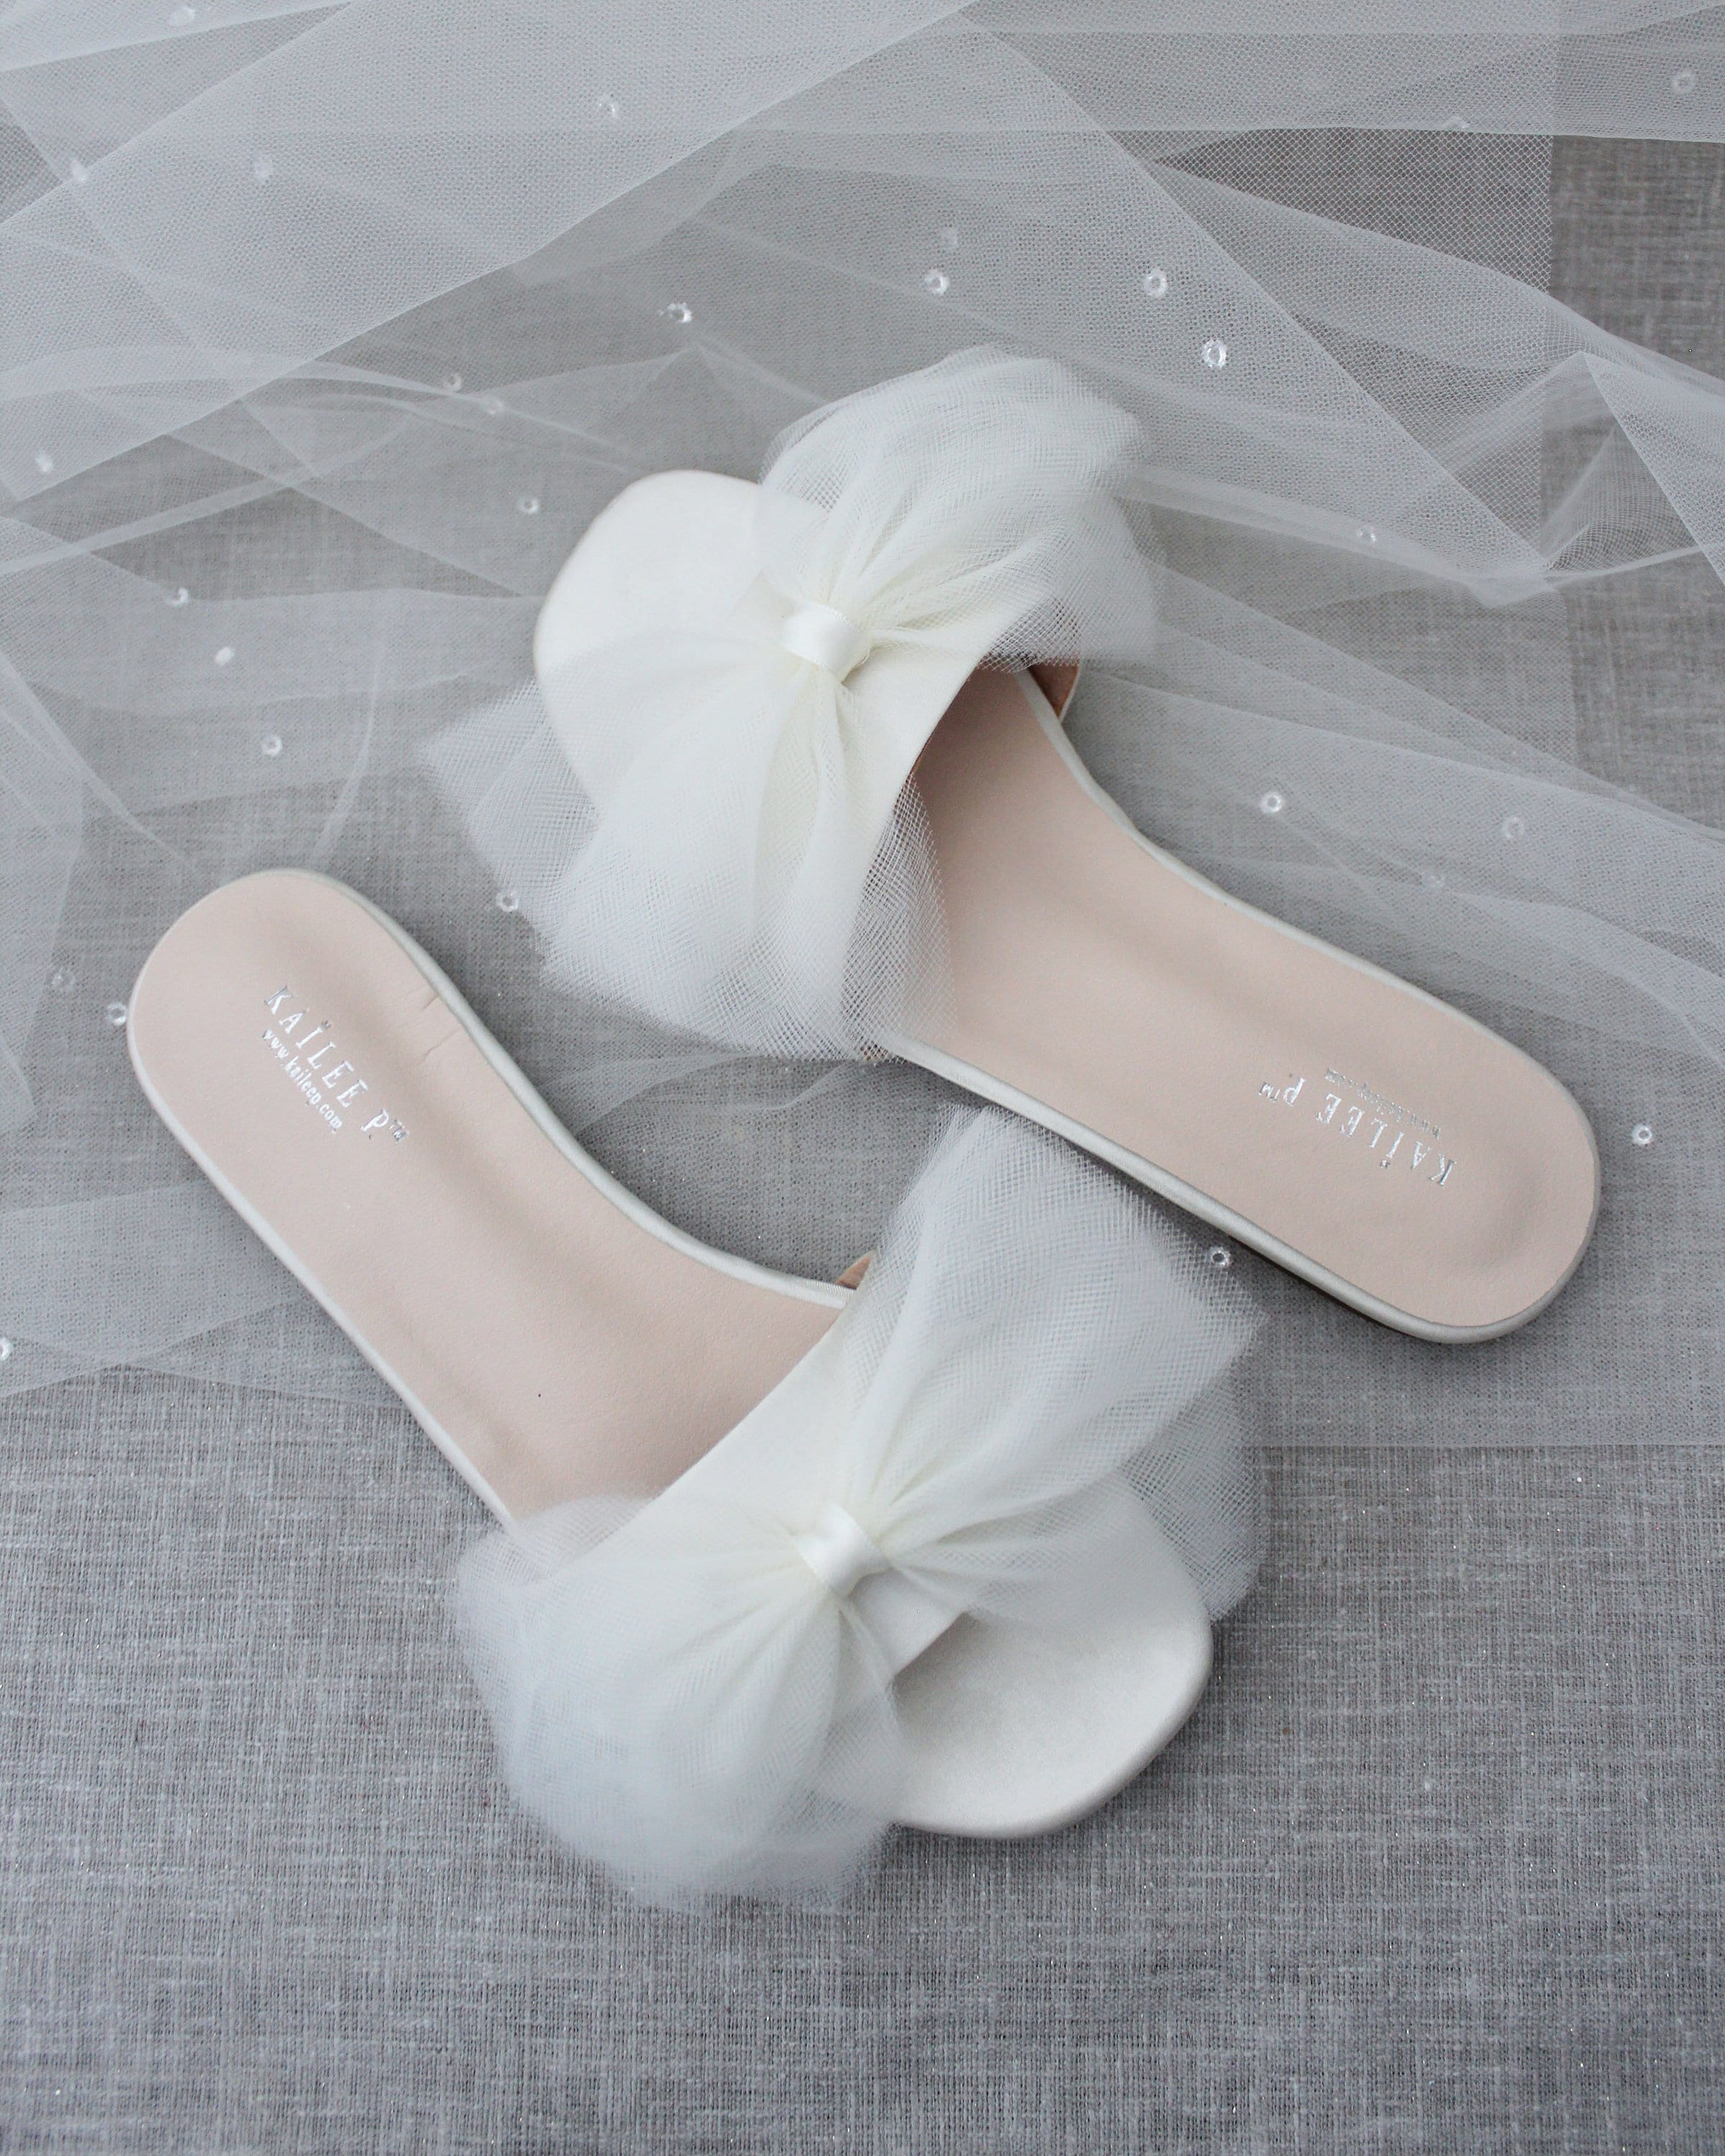 Teal Green Bridal Lace Flip Flops, Iridescent Bridal Sandals, White Flip  Flops, Wedding Flip Flops, Beach Wedding Sandals 